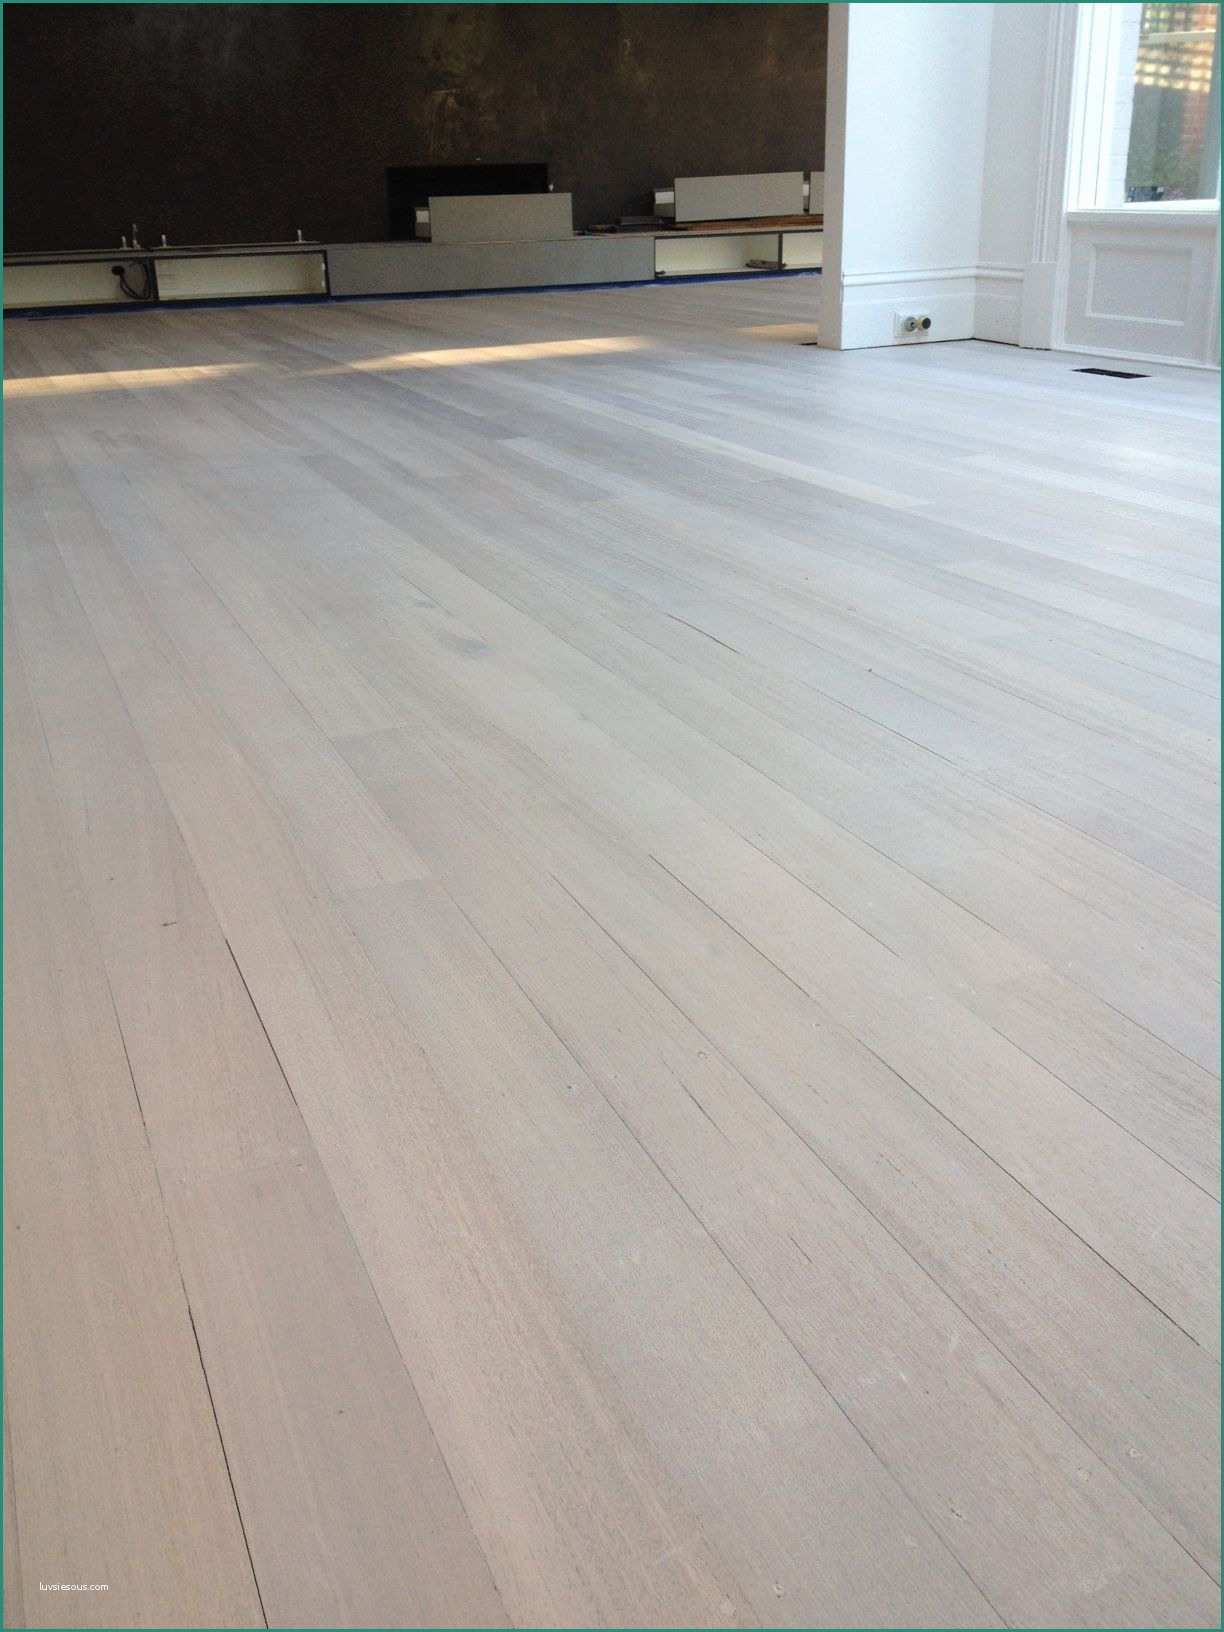 Cadorin Parquet Prezzi E French Oak Strip Timber Floors by Windsor Parquet